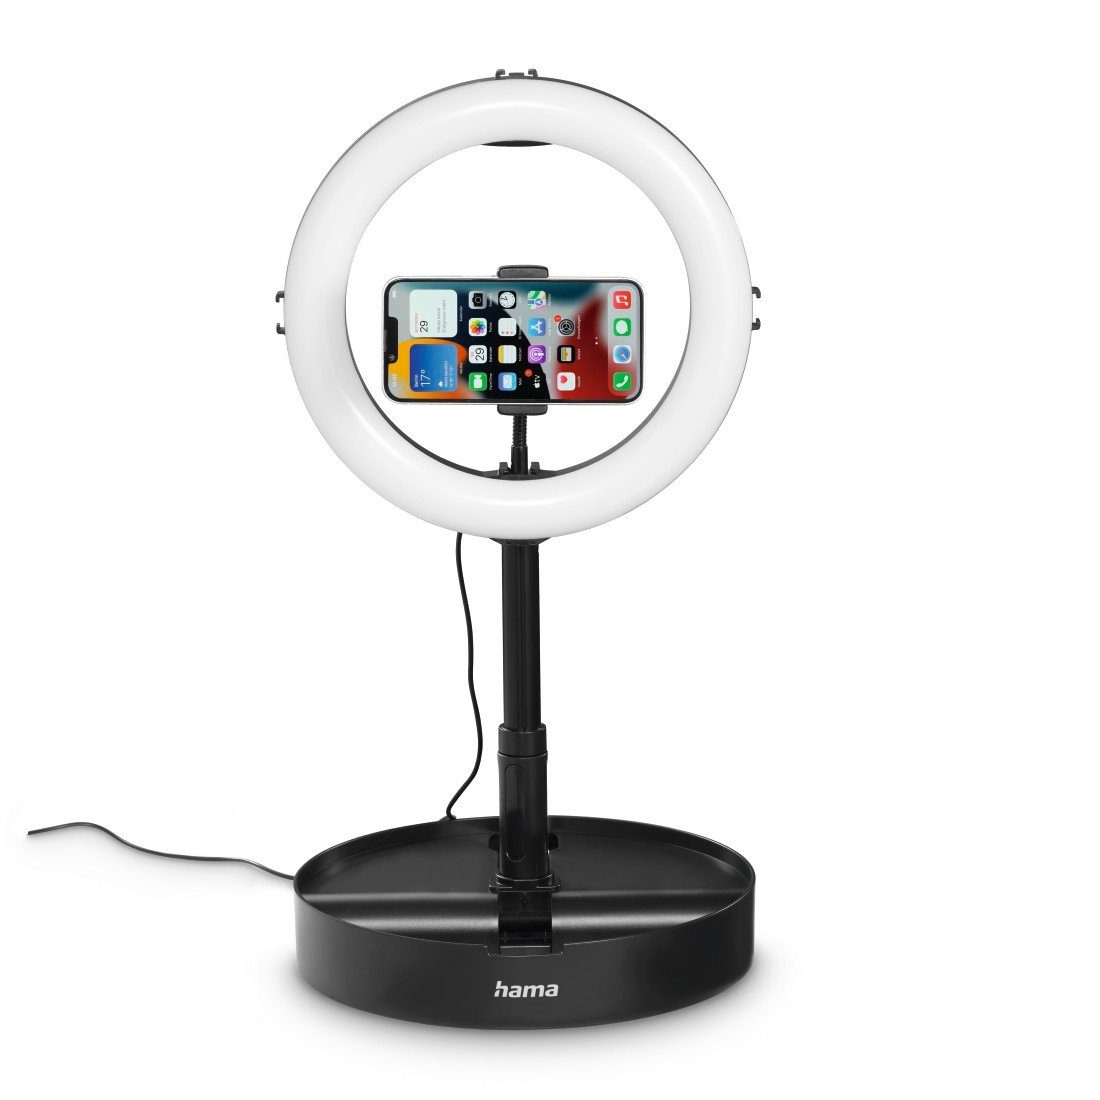 Hama Ringlicht Videokonferenz mit Ringleuchte Webcam, Stativ für LED Mikrofon, Handy